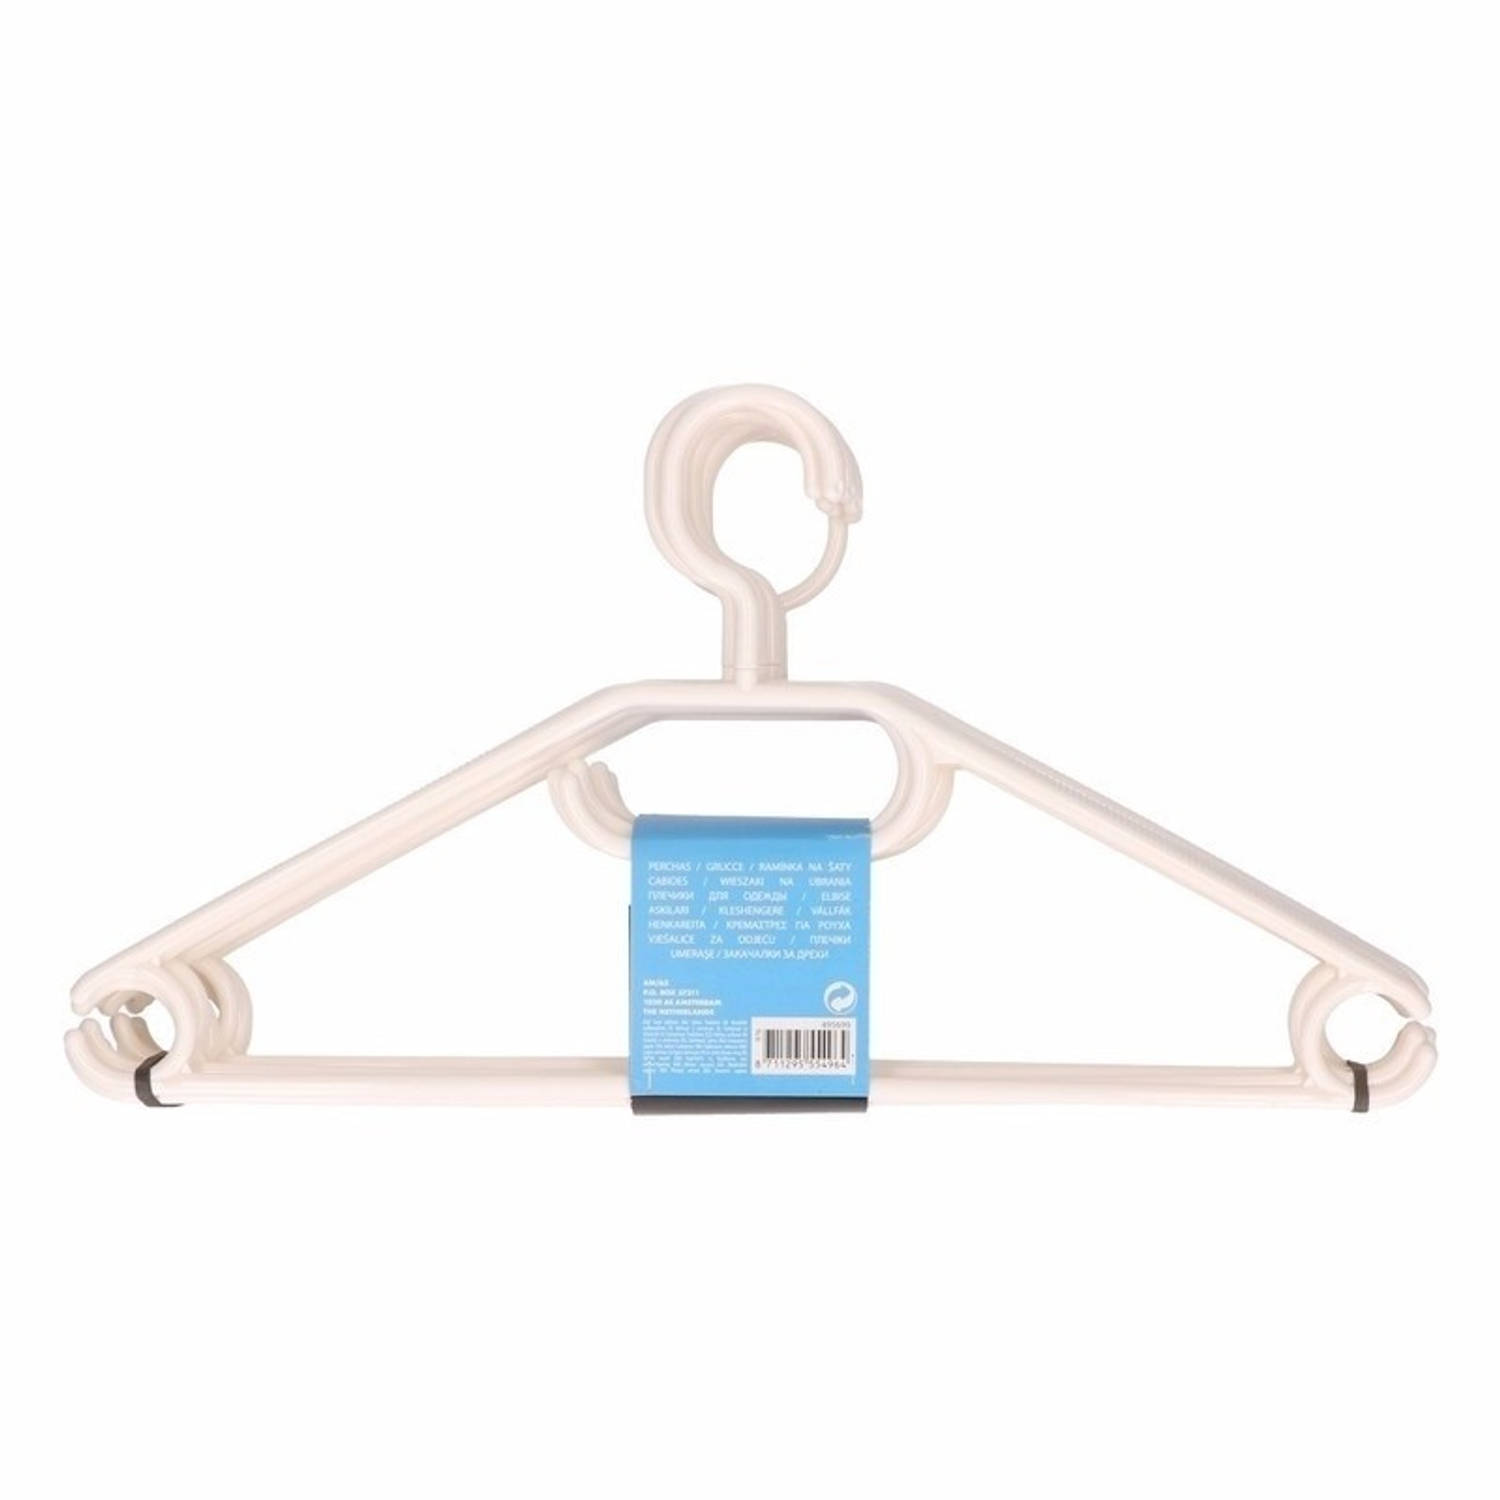 60x Plastic Kledinghangers - Kleerhangers - Kunststof Garderobe Hangers Voor Kledingrek/kledingkast 60 Stuks - Wit